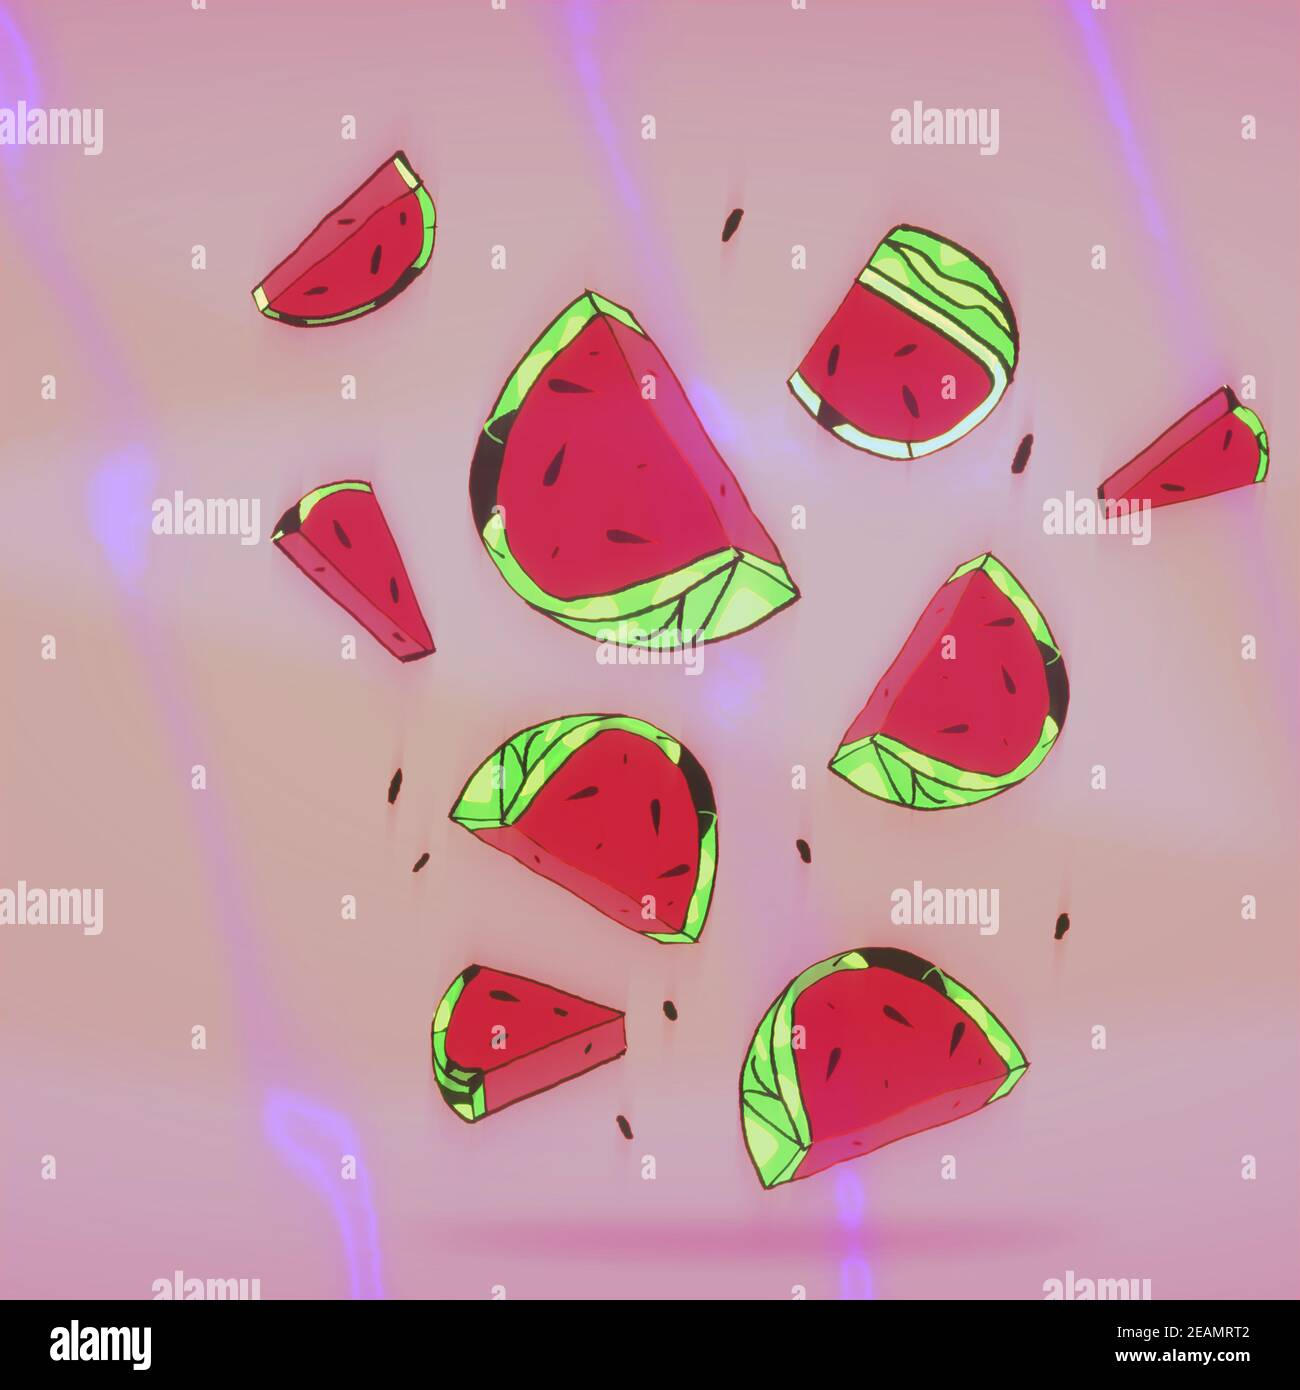 Watermelon concept art, summertime illustration Stock Photo